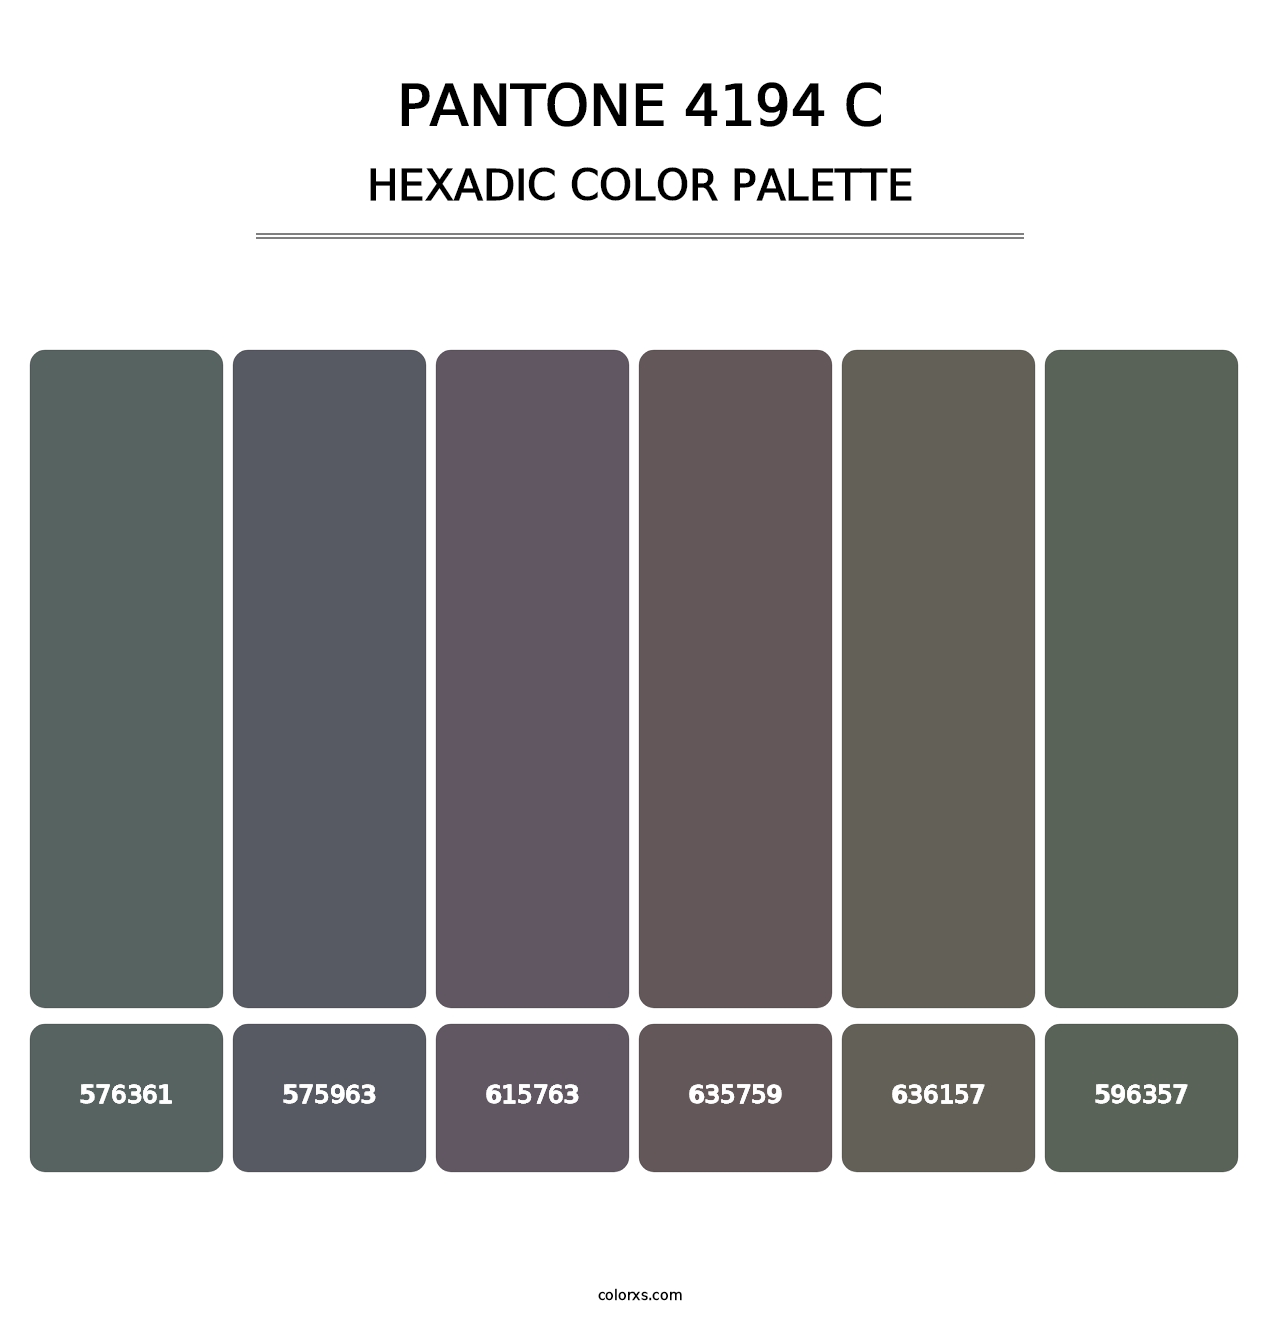 PANTONE 4194 C - Hexadic Color Palette